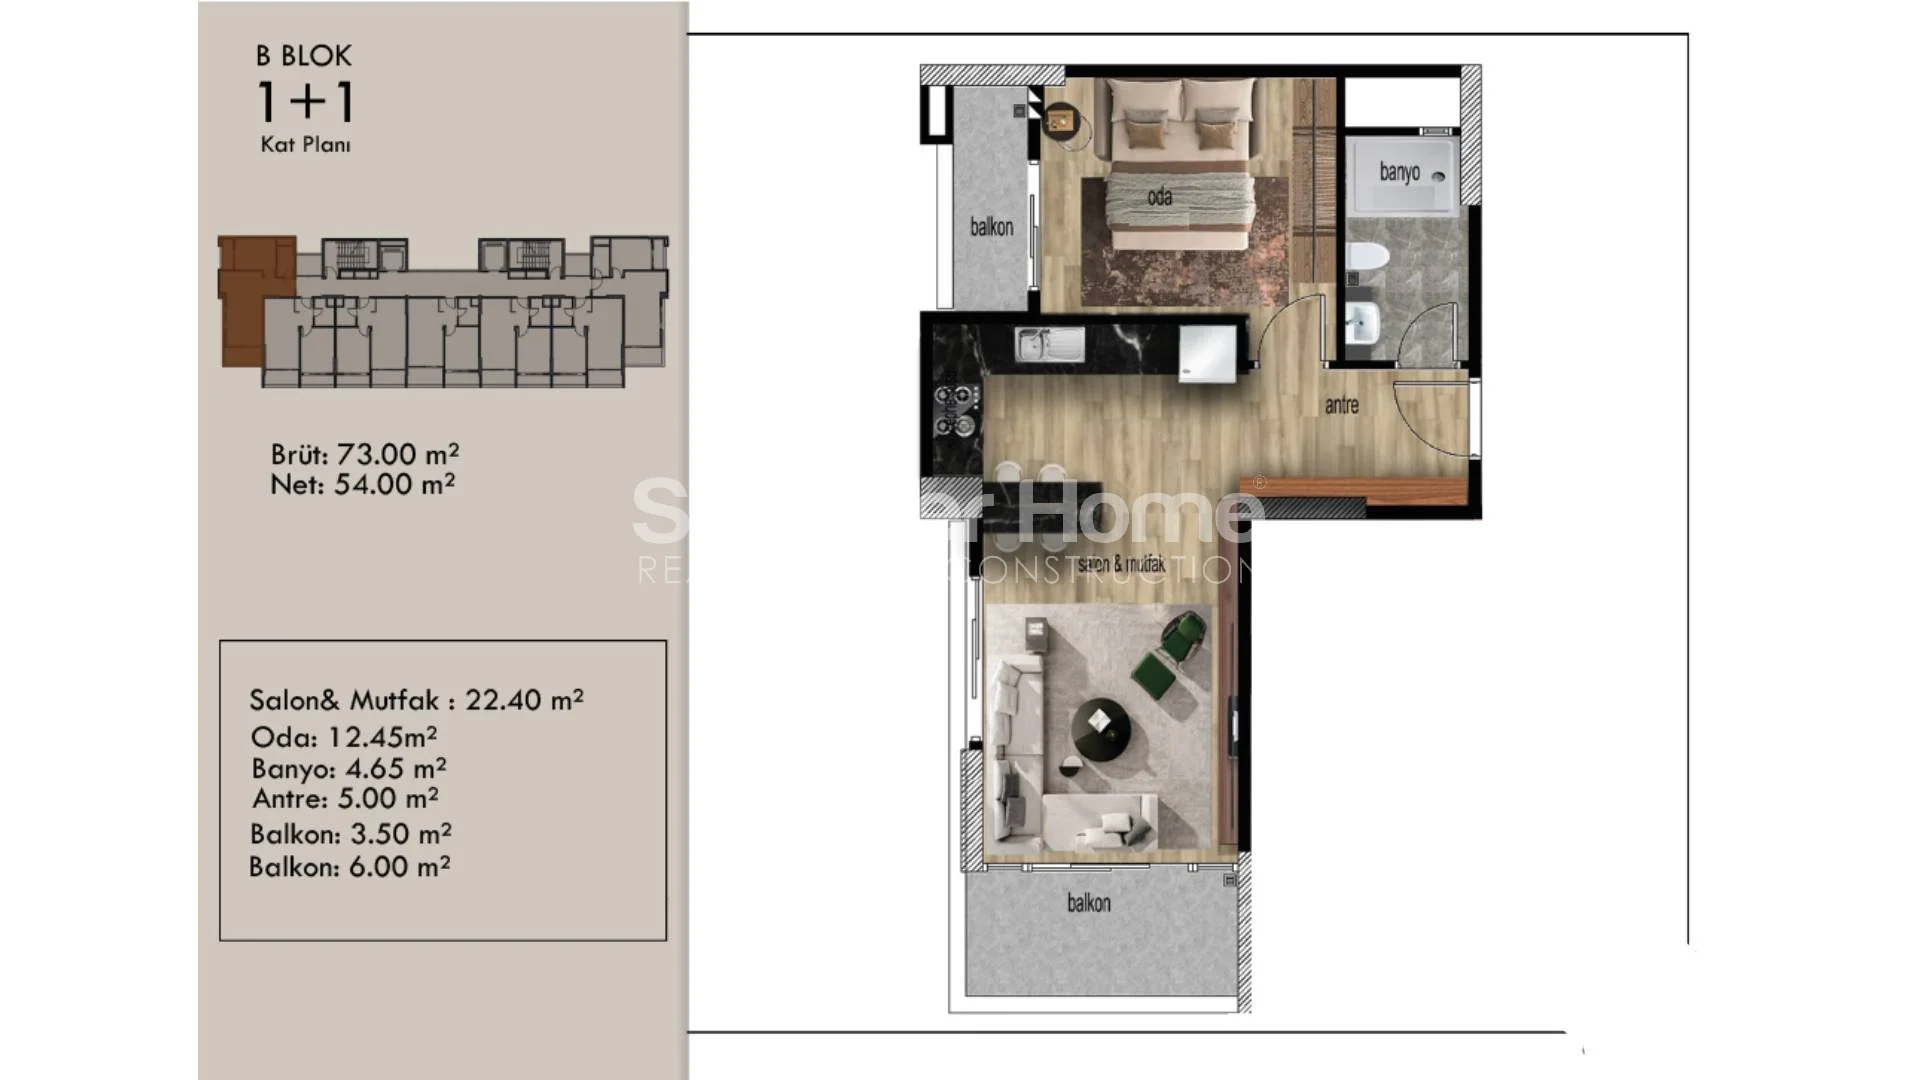 Jednosobni apartmani po pristupačnim cijenama, Arpacbahsis plan - 28